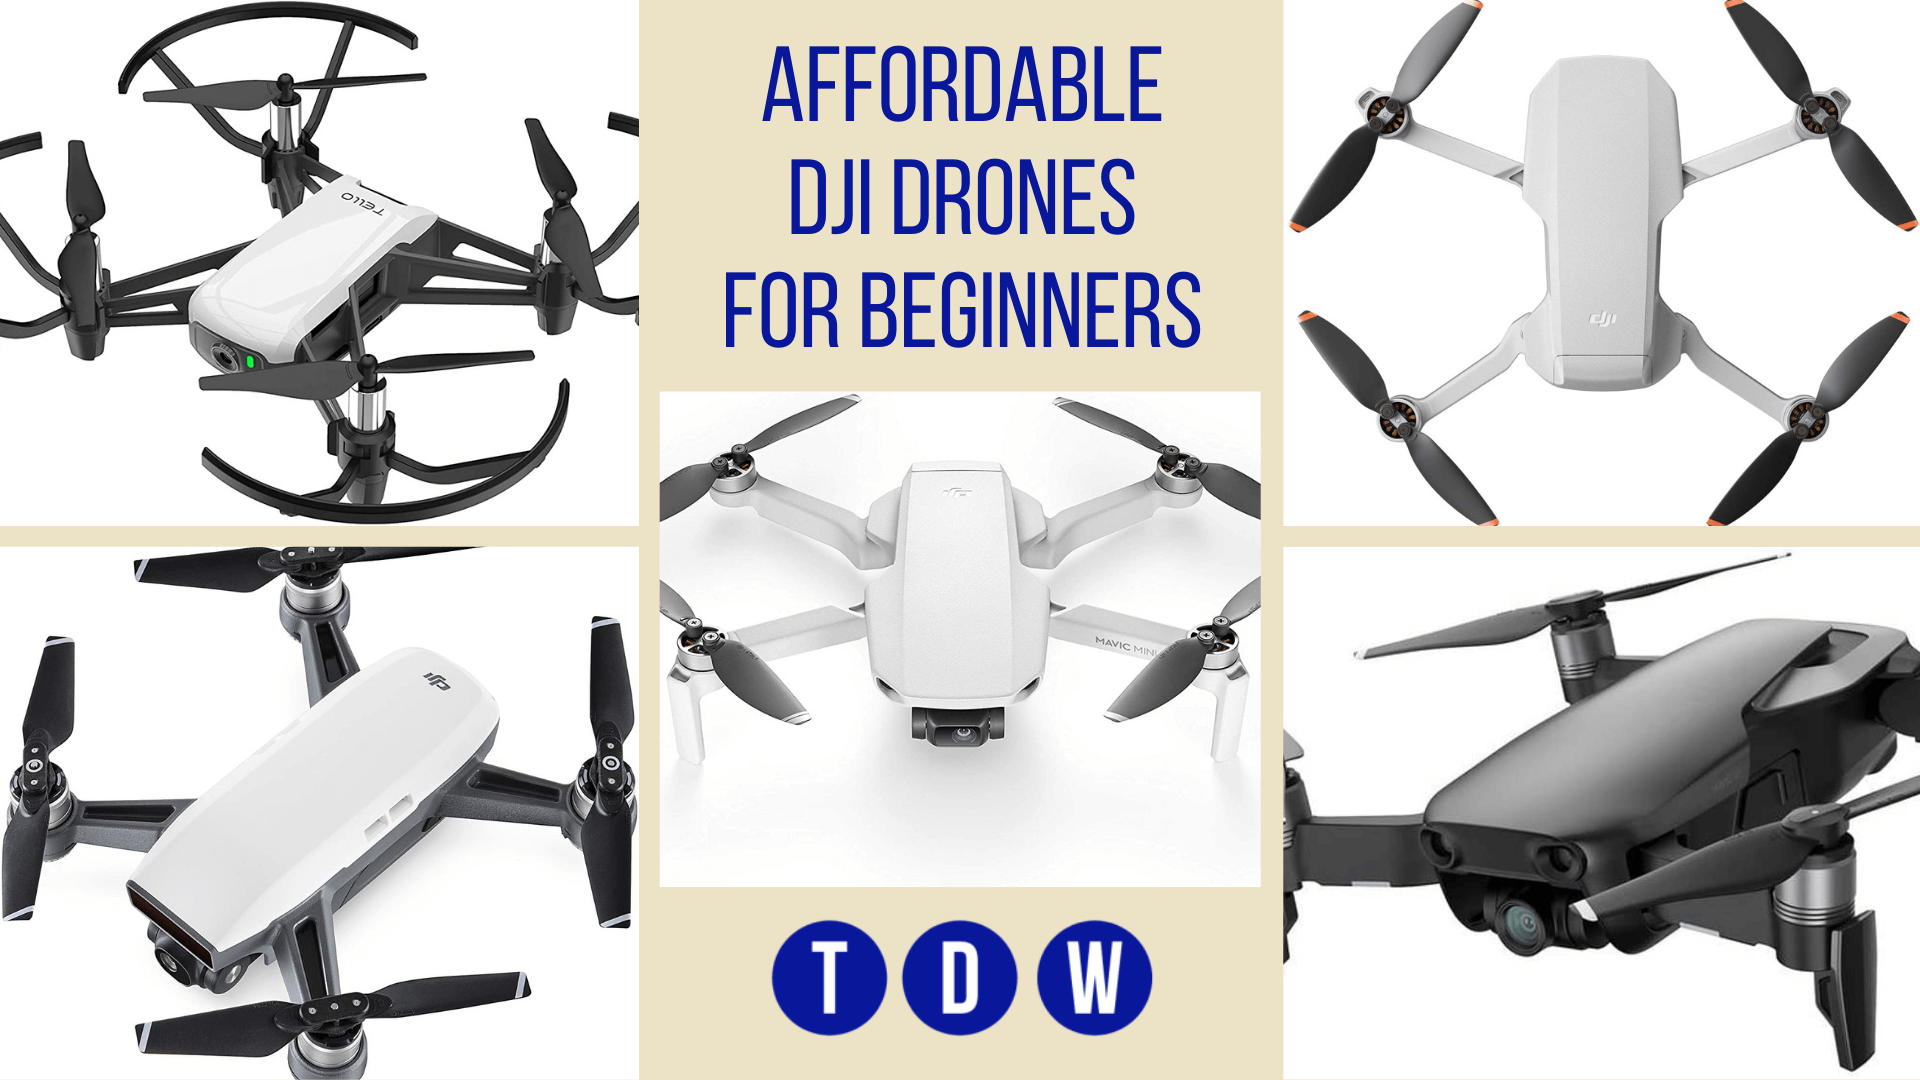 DJI drones for beginners